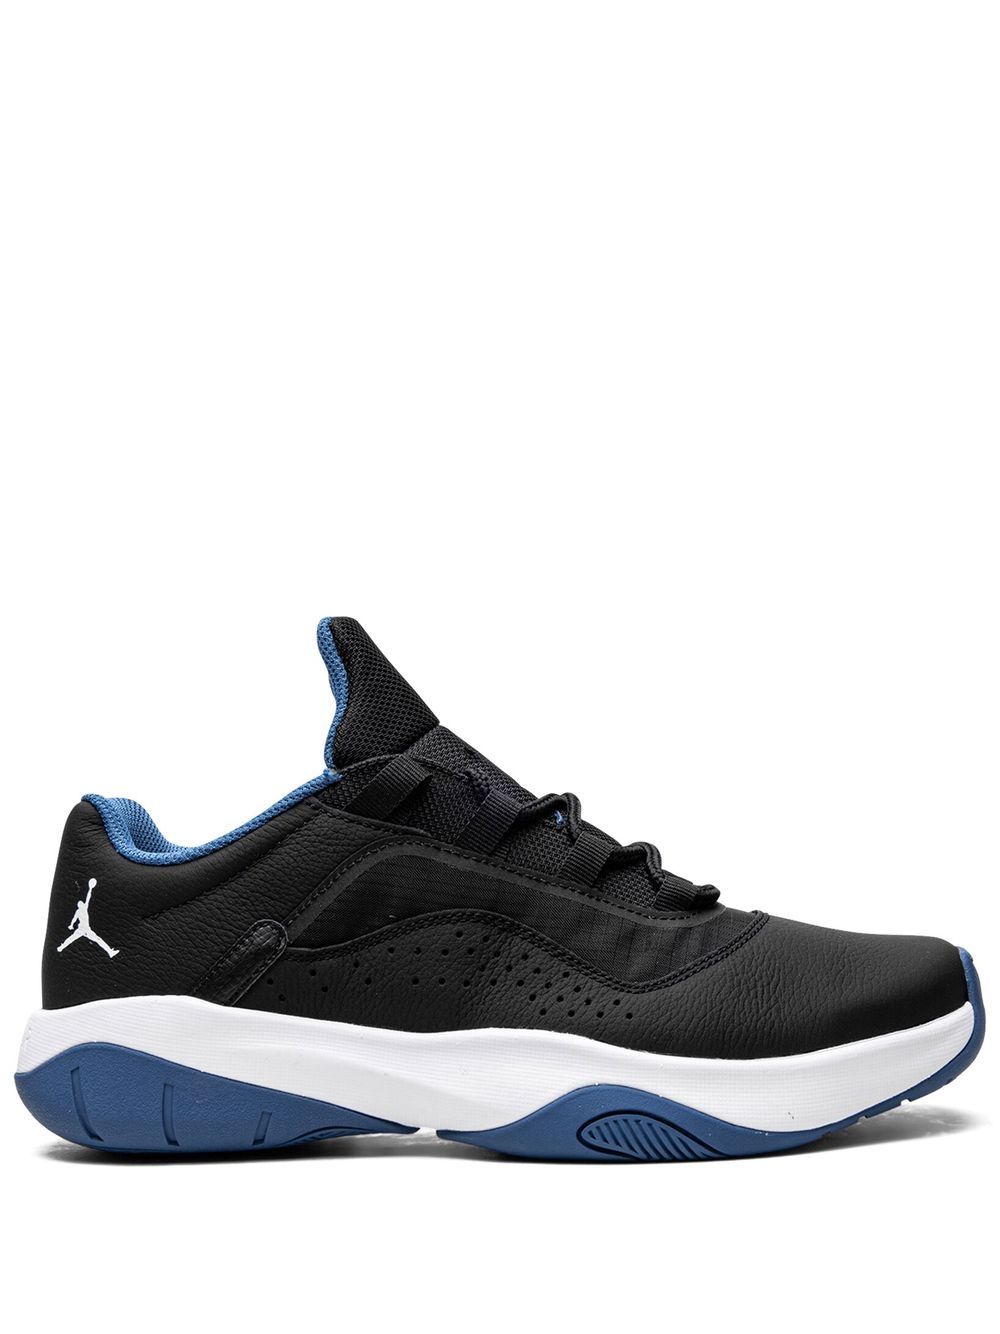 Jordan Air Jordan 11 CMFT Low "Black/Dark Marina Blue/White" sneakers